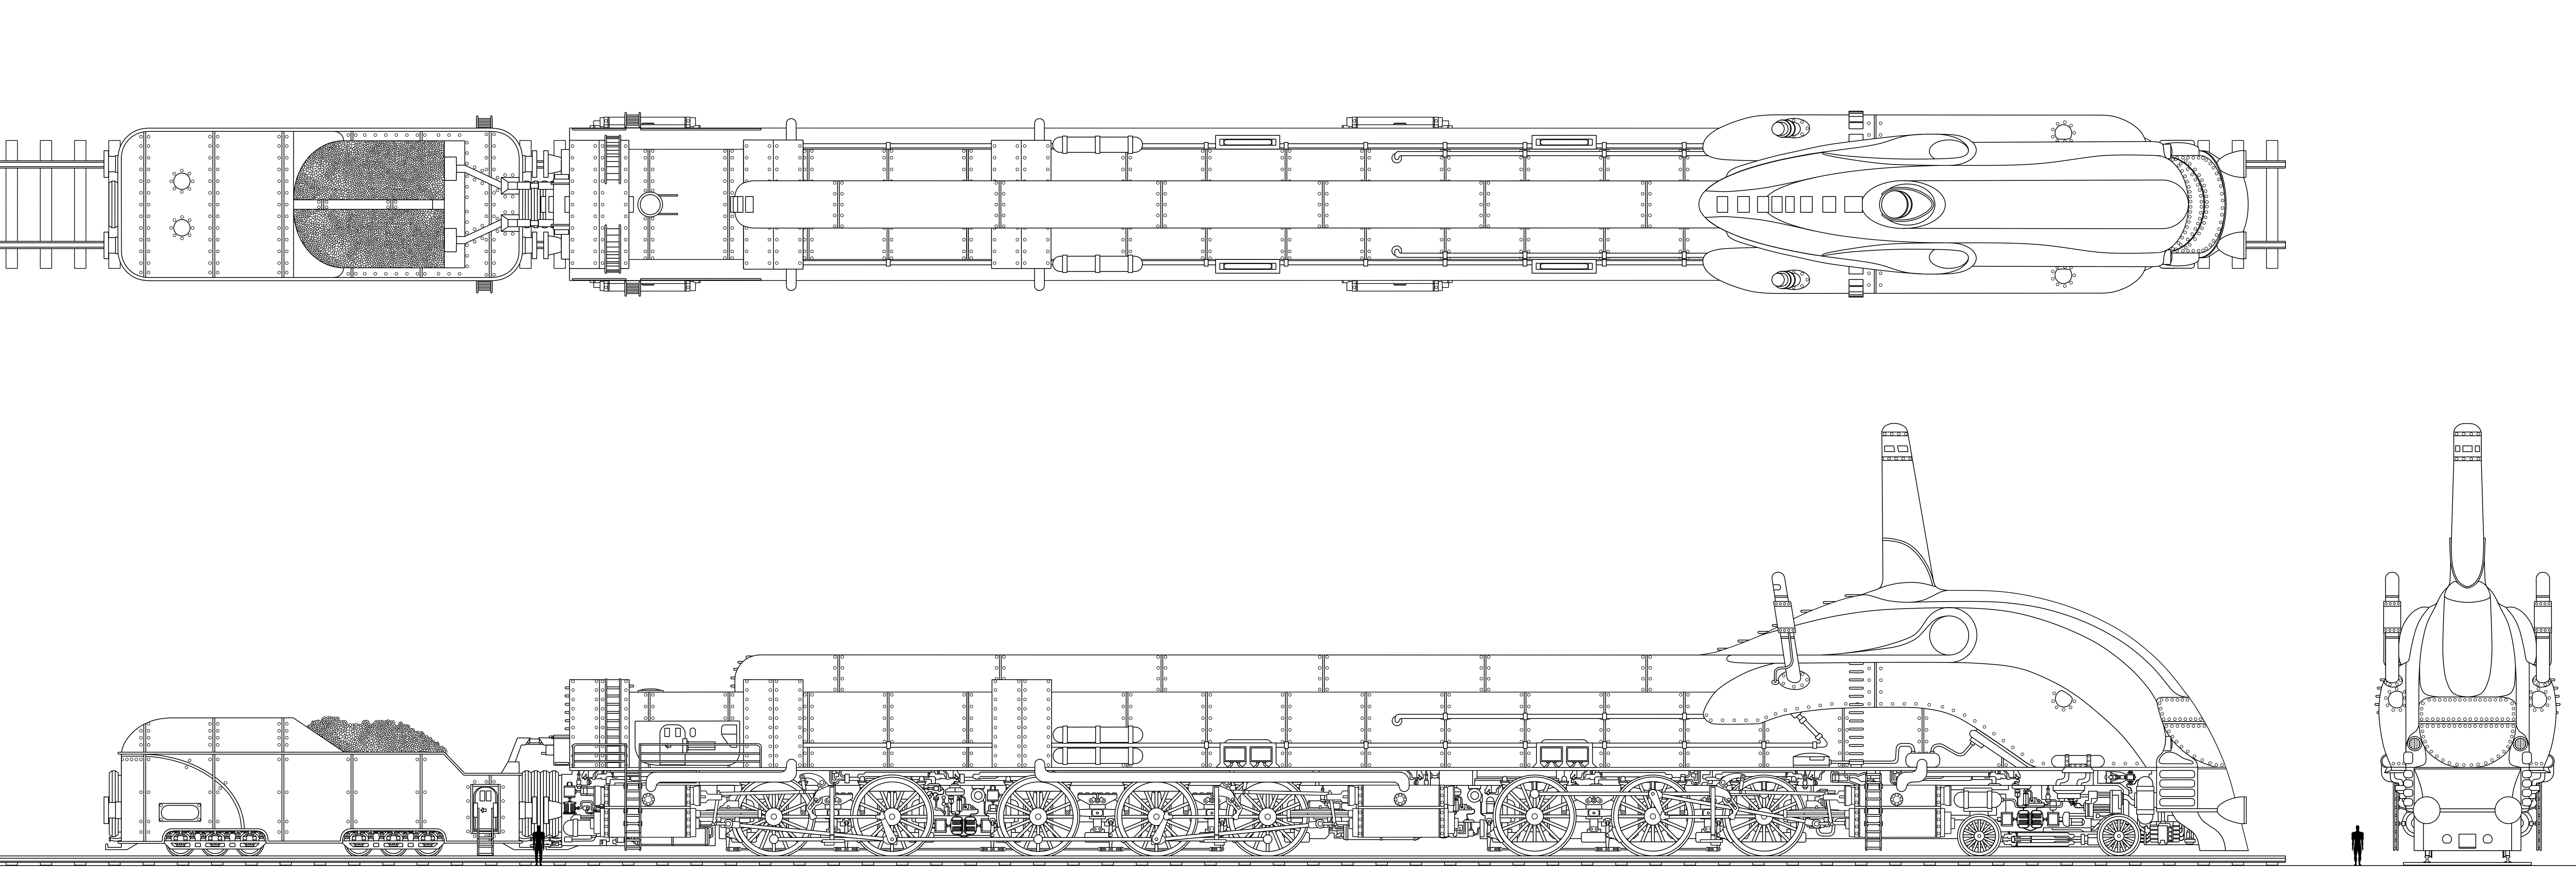 The Mighty Transarctica Locomotive with Tender